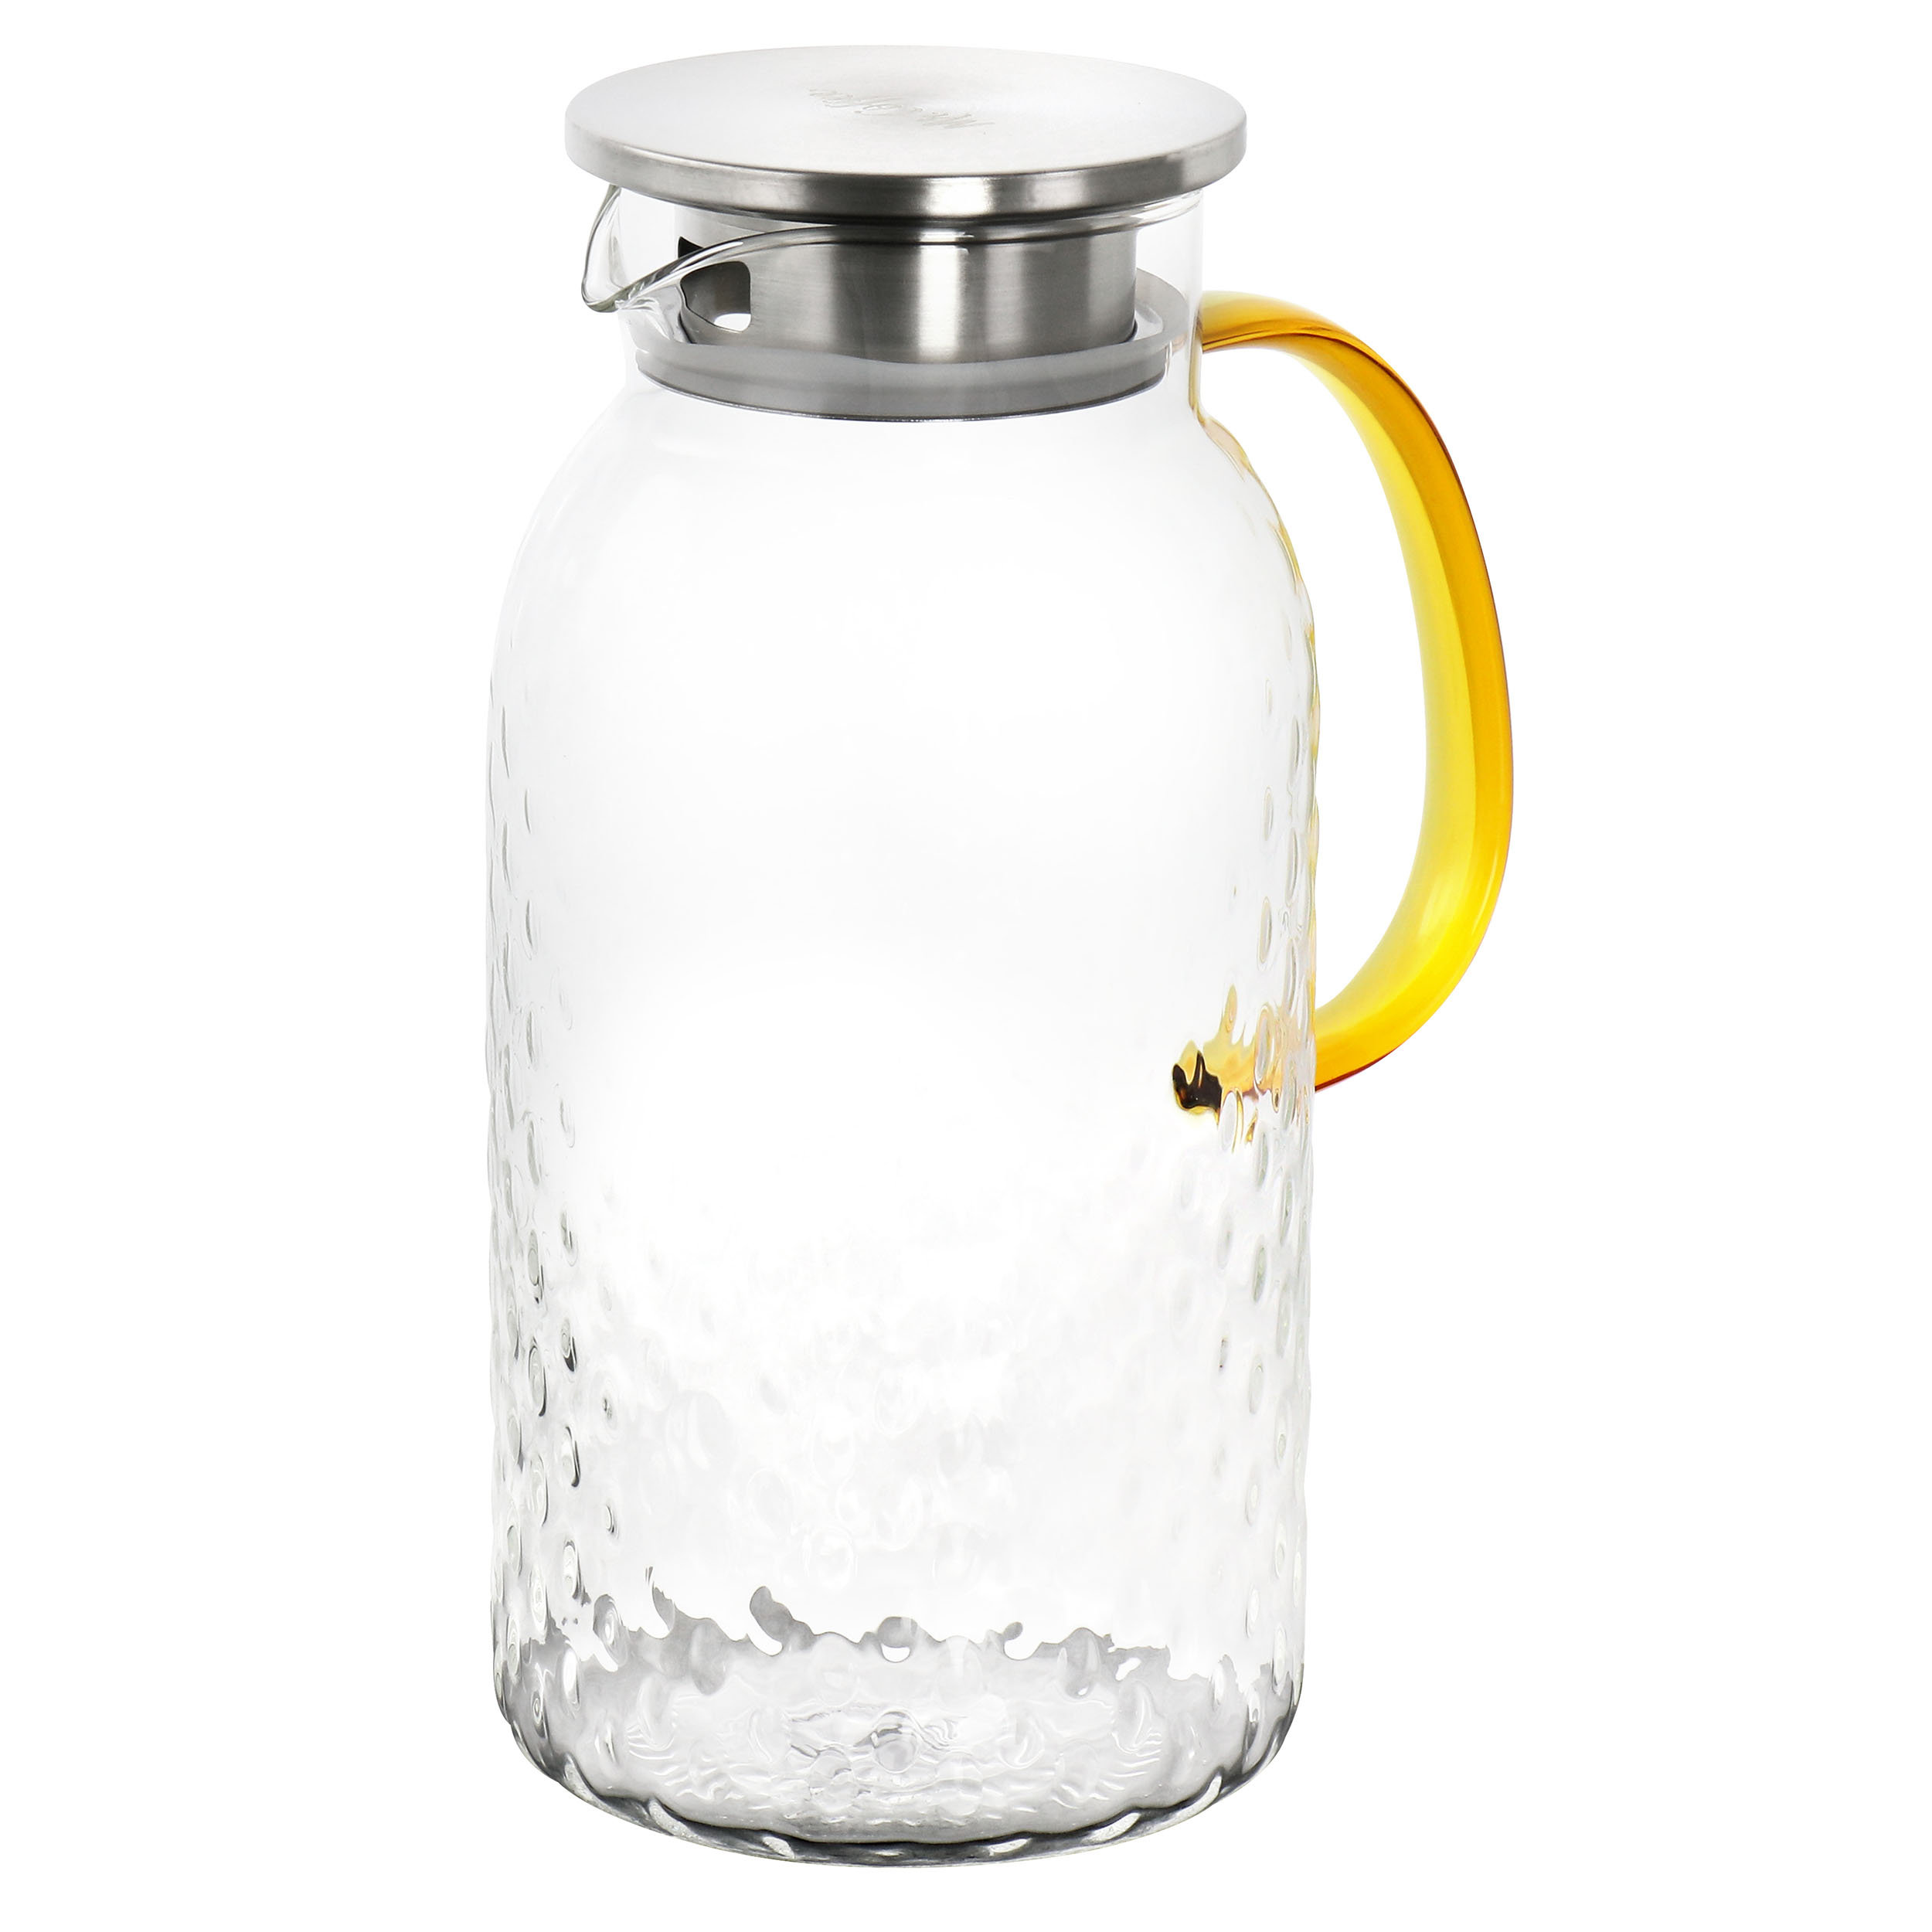 Glass Pitcher 50oz Water Pitcher With Lid Spout Tea Bottle Heat